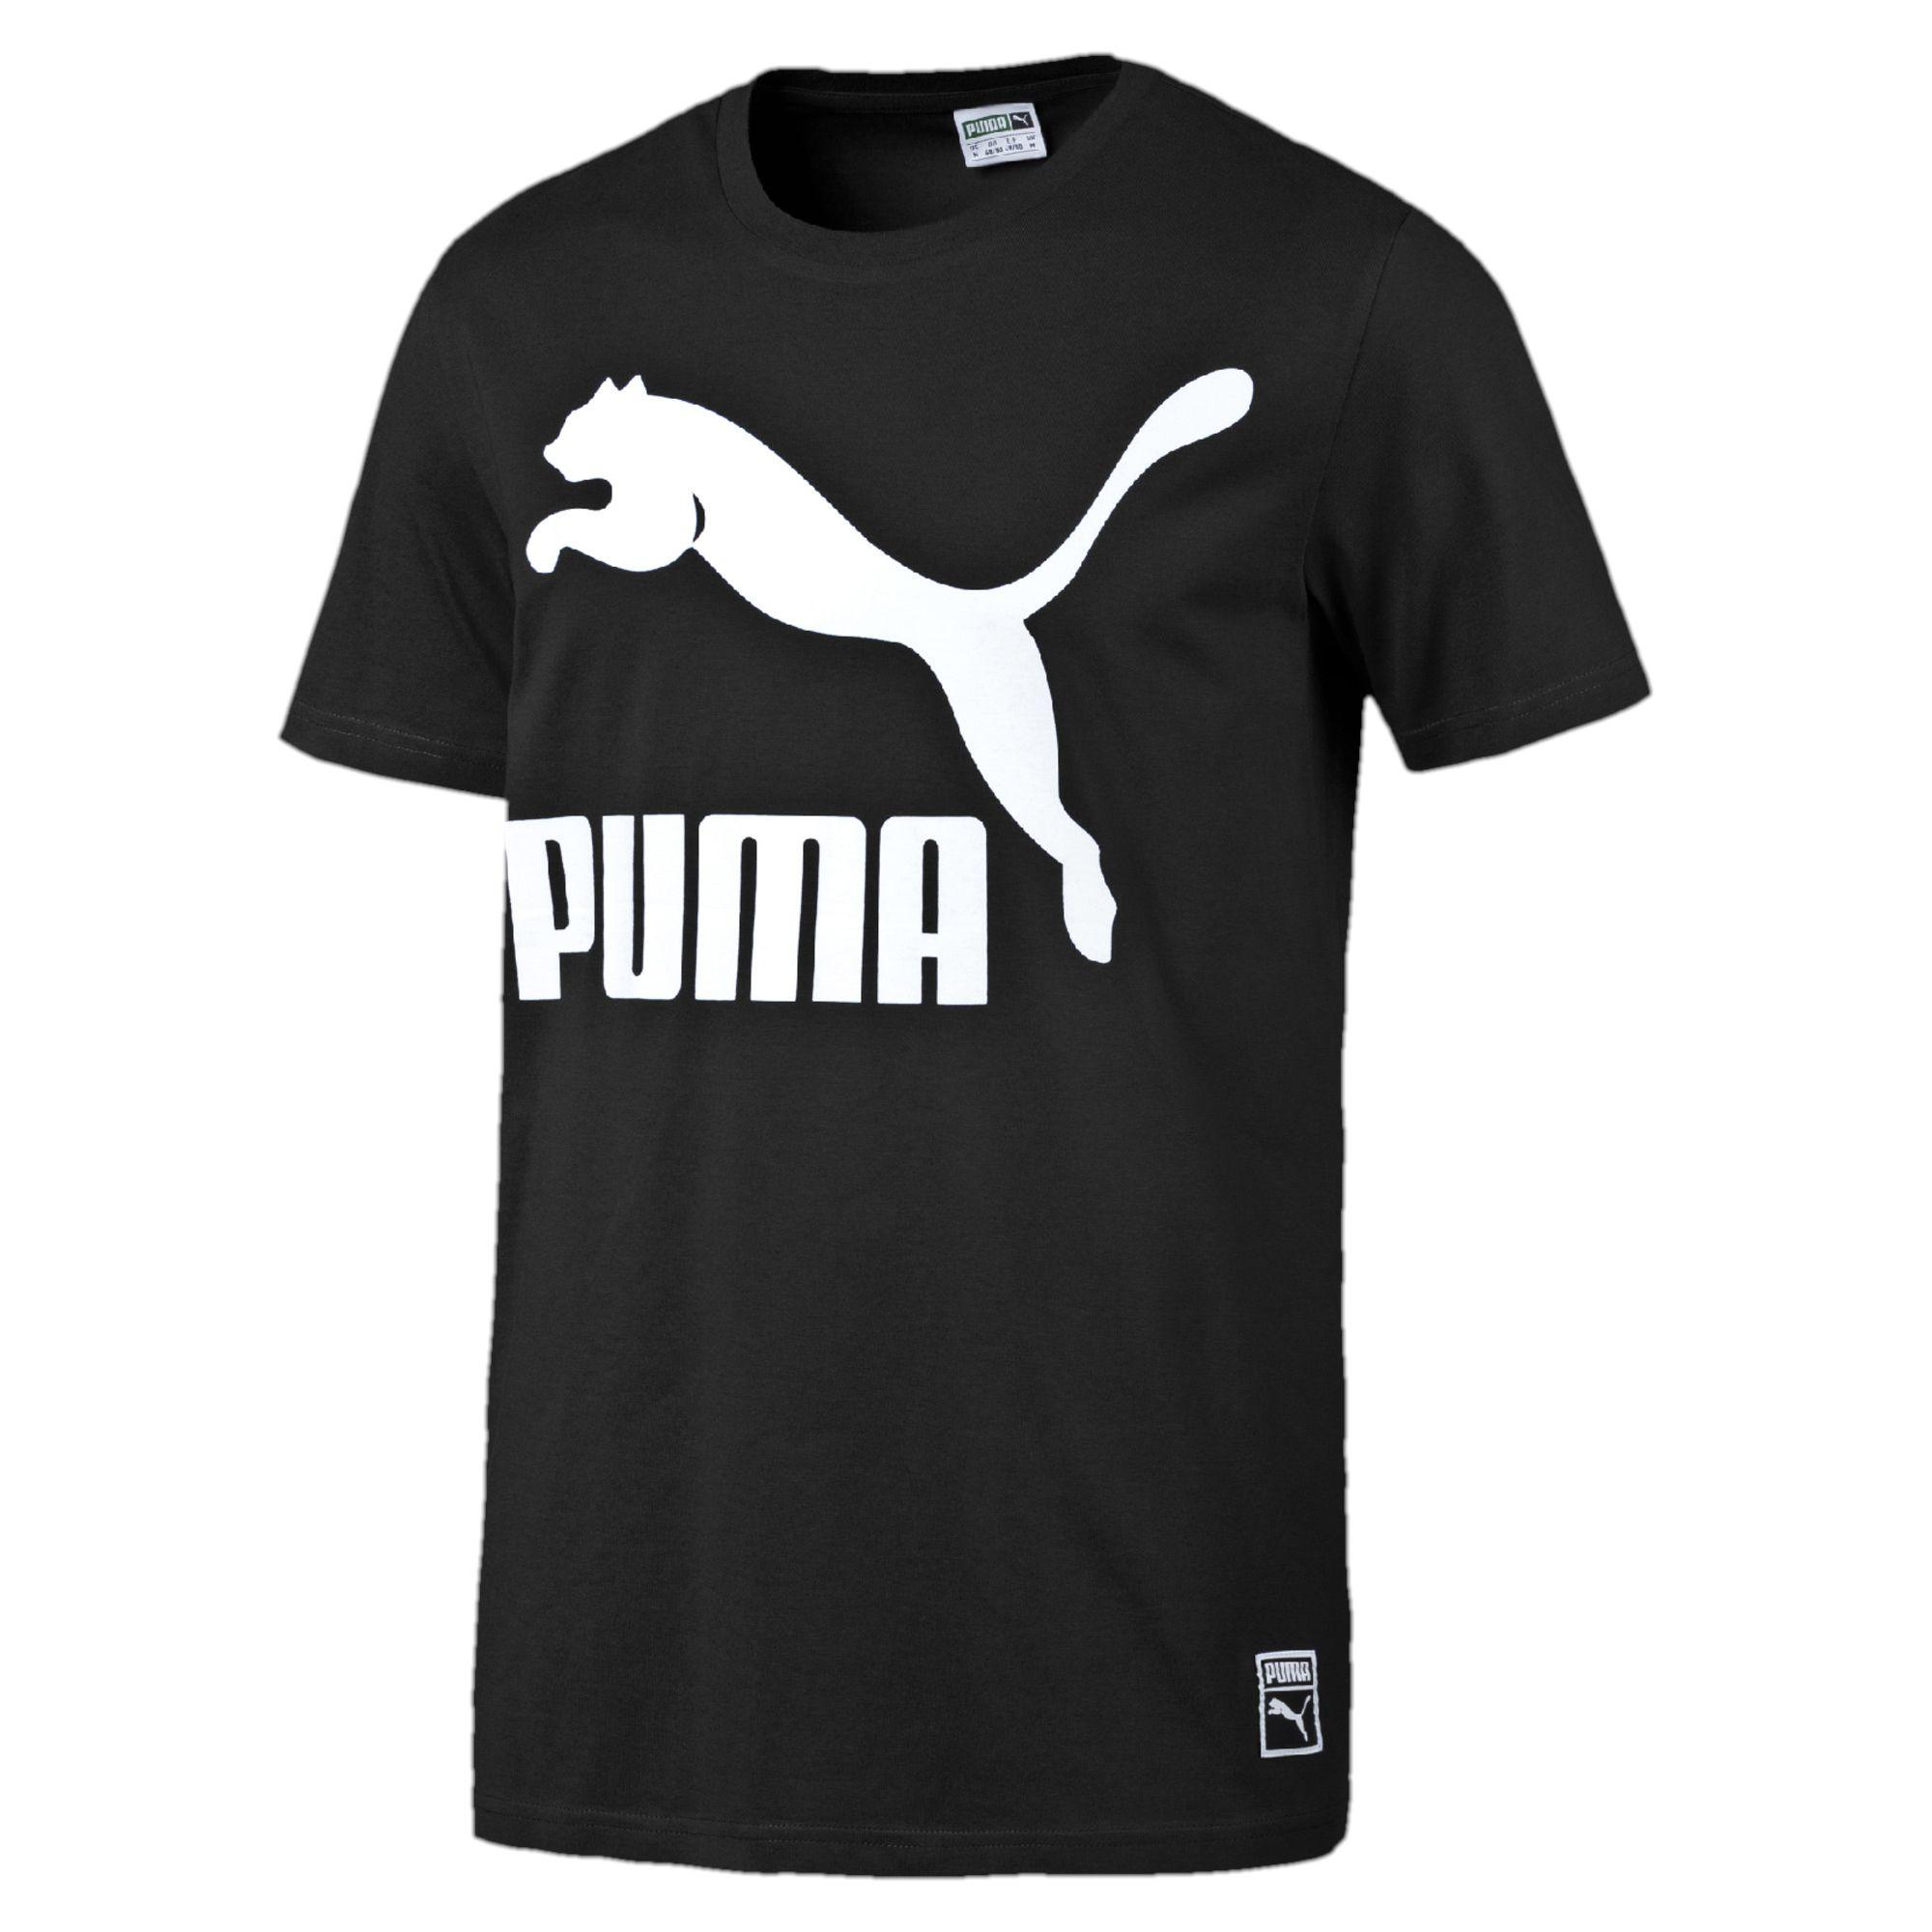 Black and White Puma Logo - Hot Sale Online Puma T Shirt Men's Archive Logo Black White